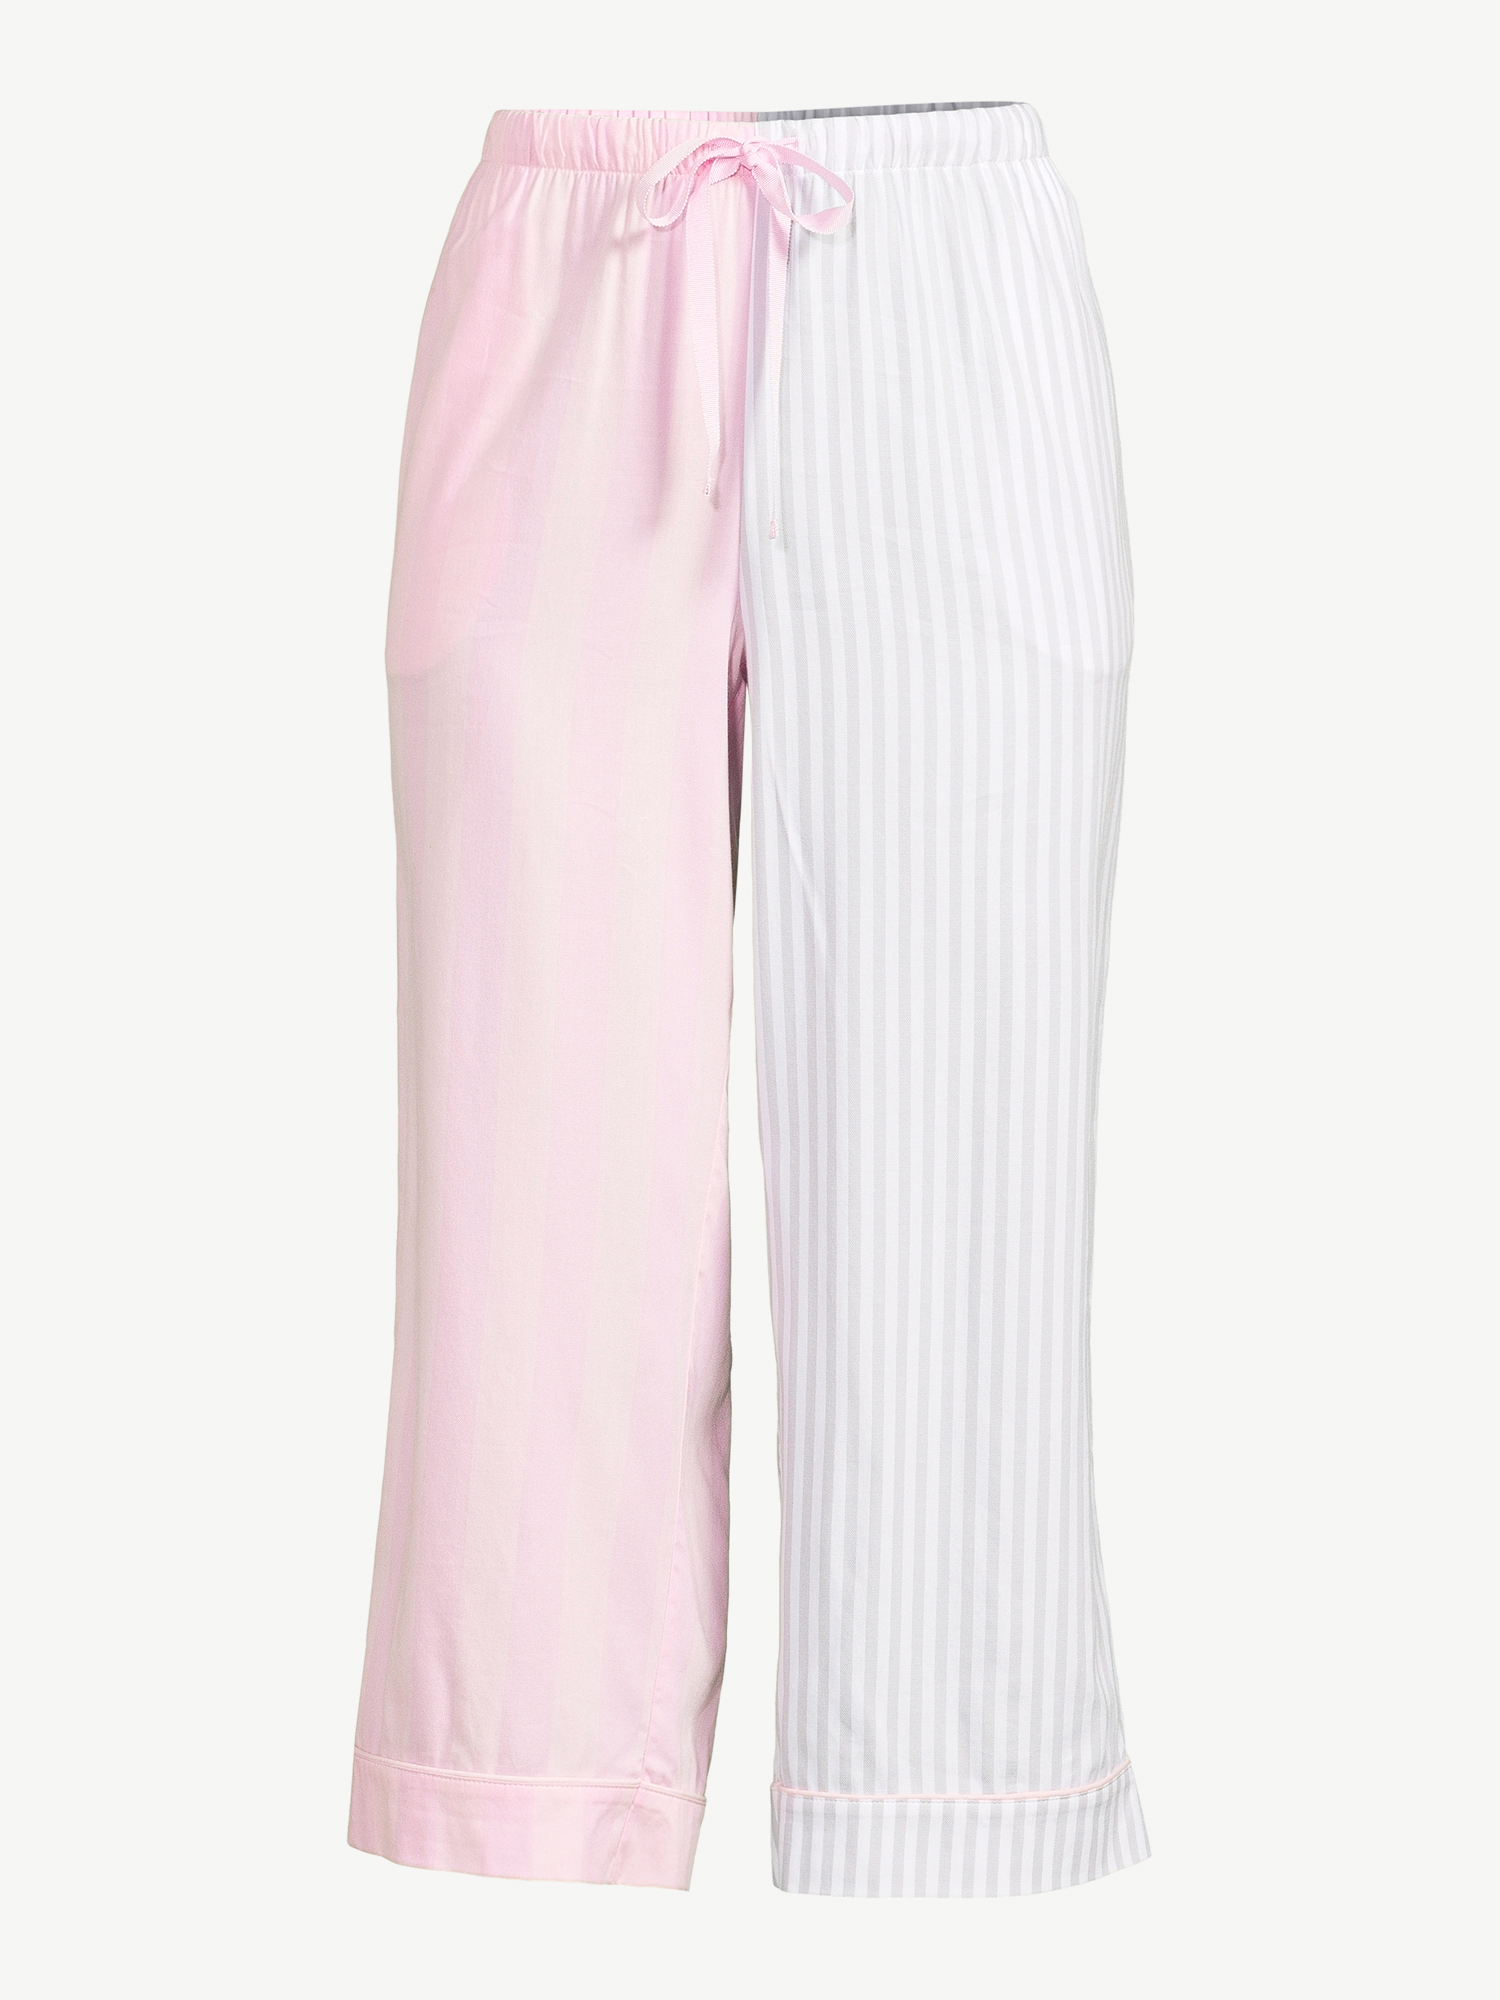 Joyspun Women's Woven Cropped Pajama Pants, Sizes S to 3X - image 5 of 5